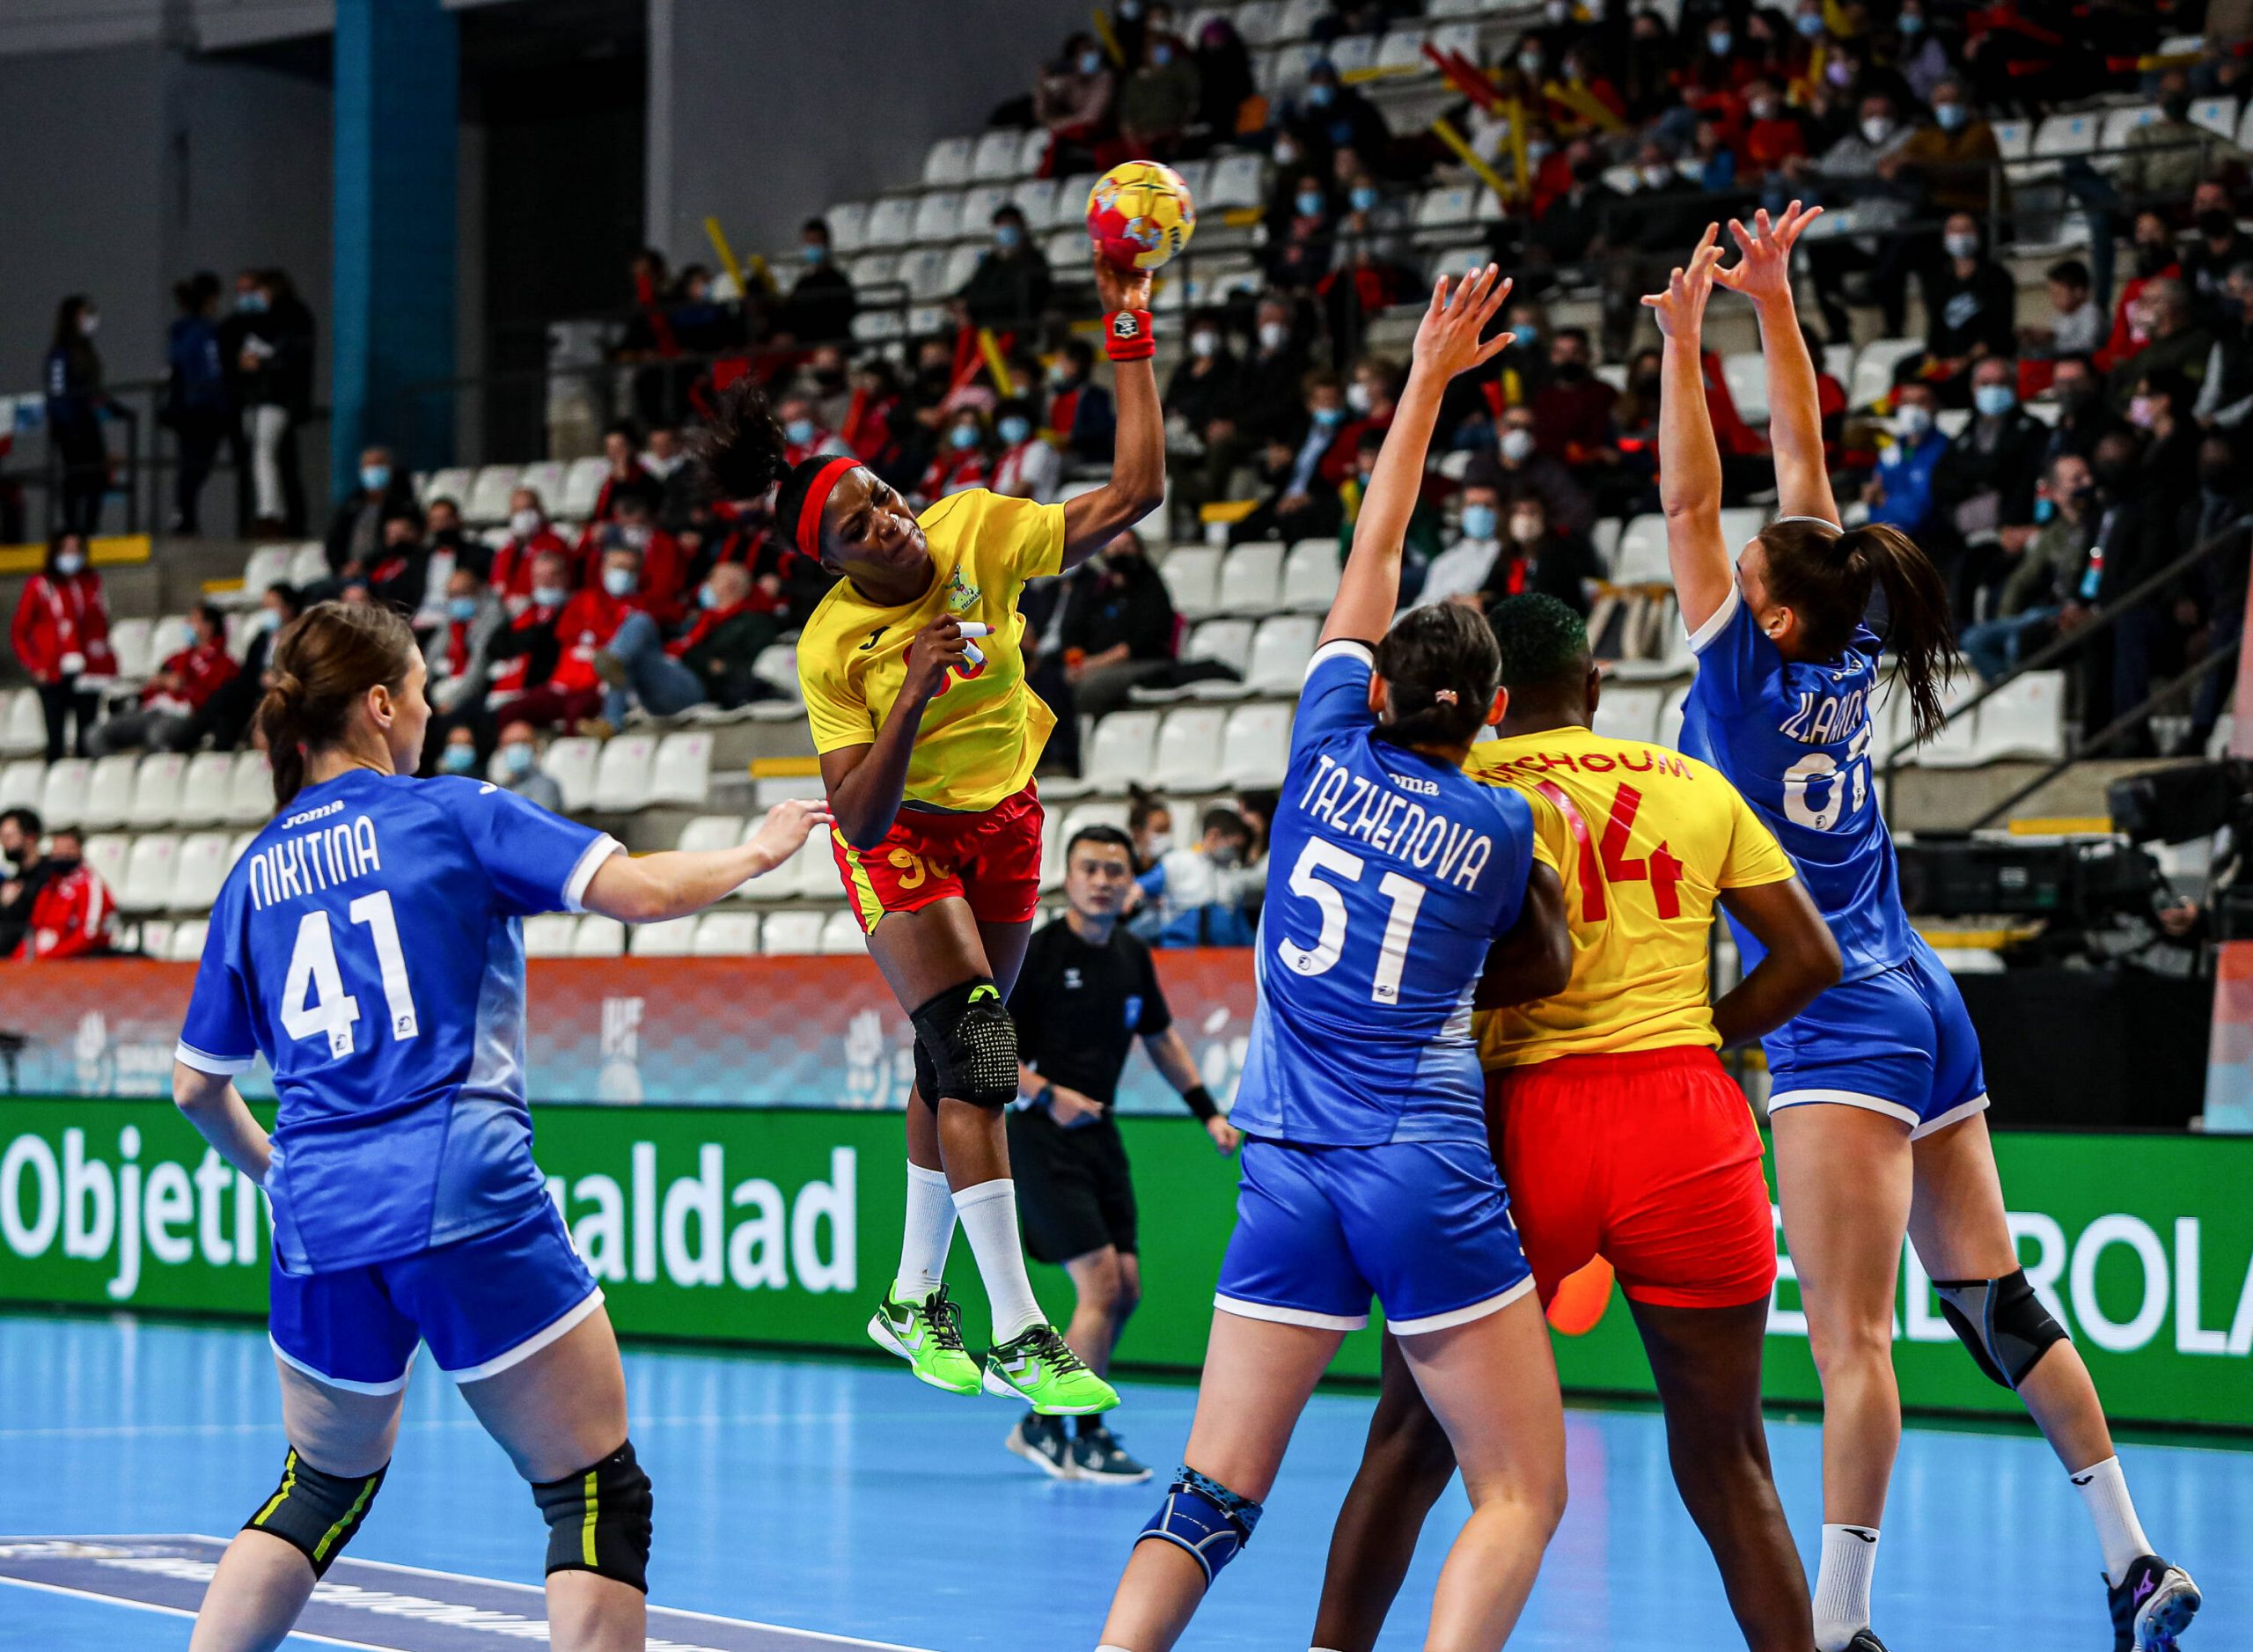 Kamerun-Handballerin Jodelle Clarisse Madjoufang